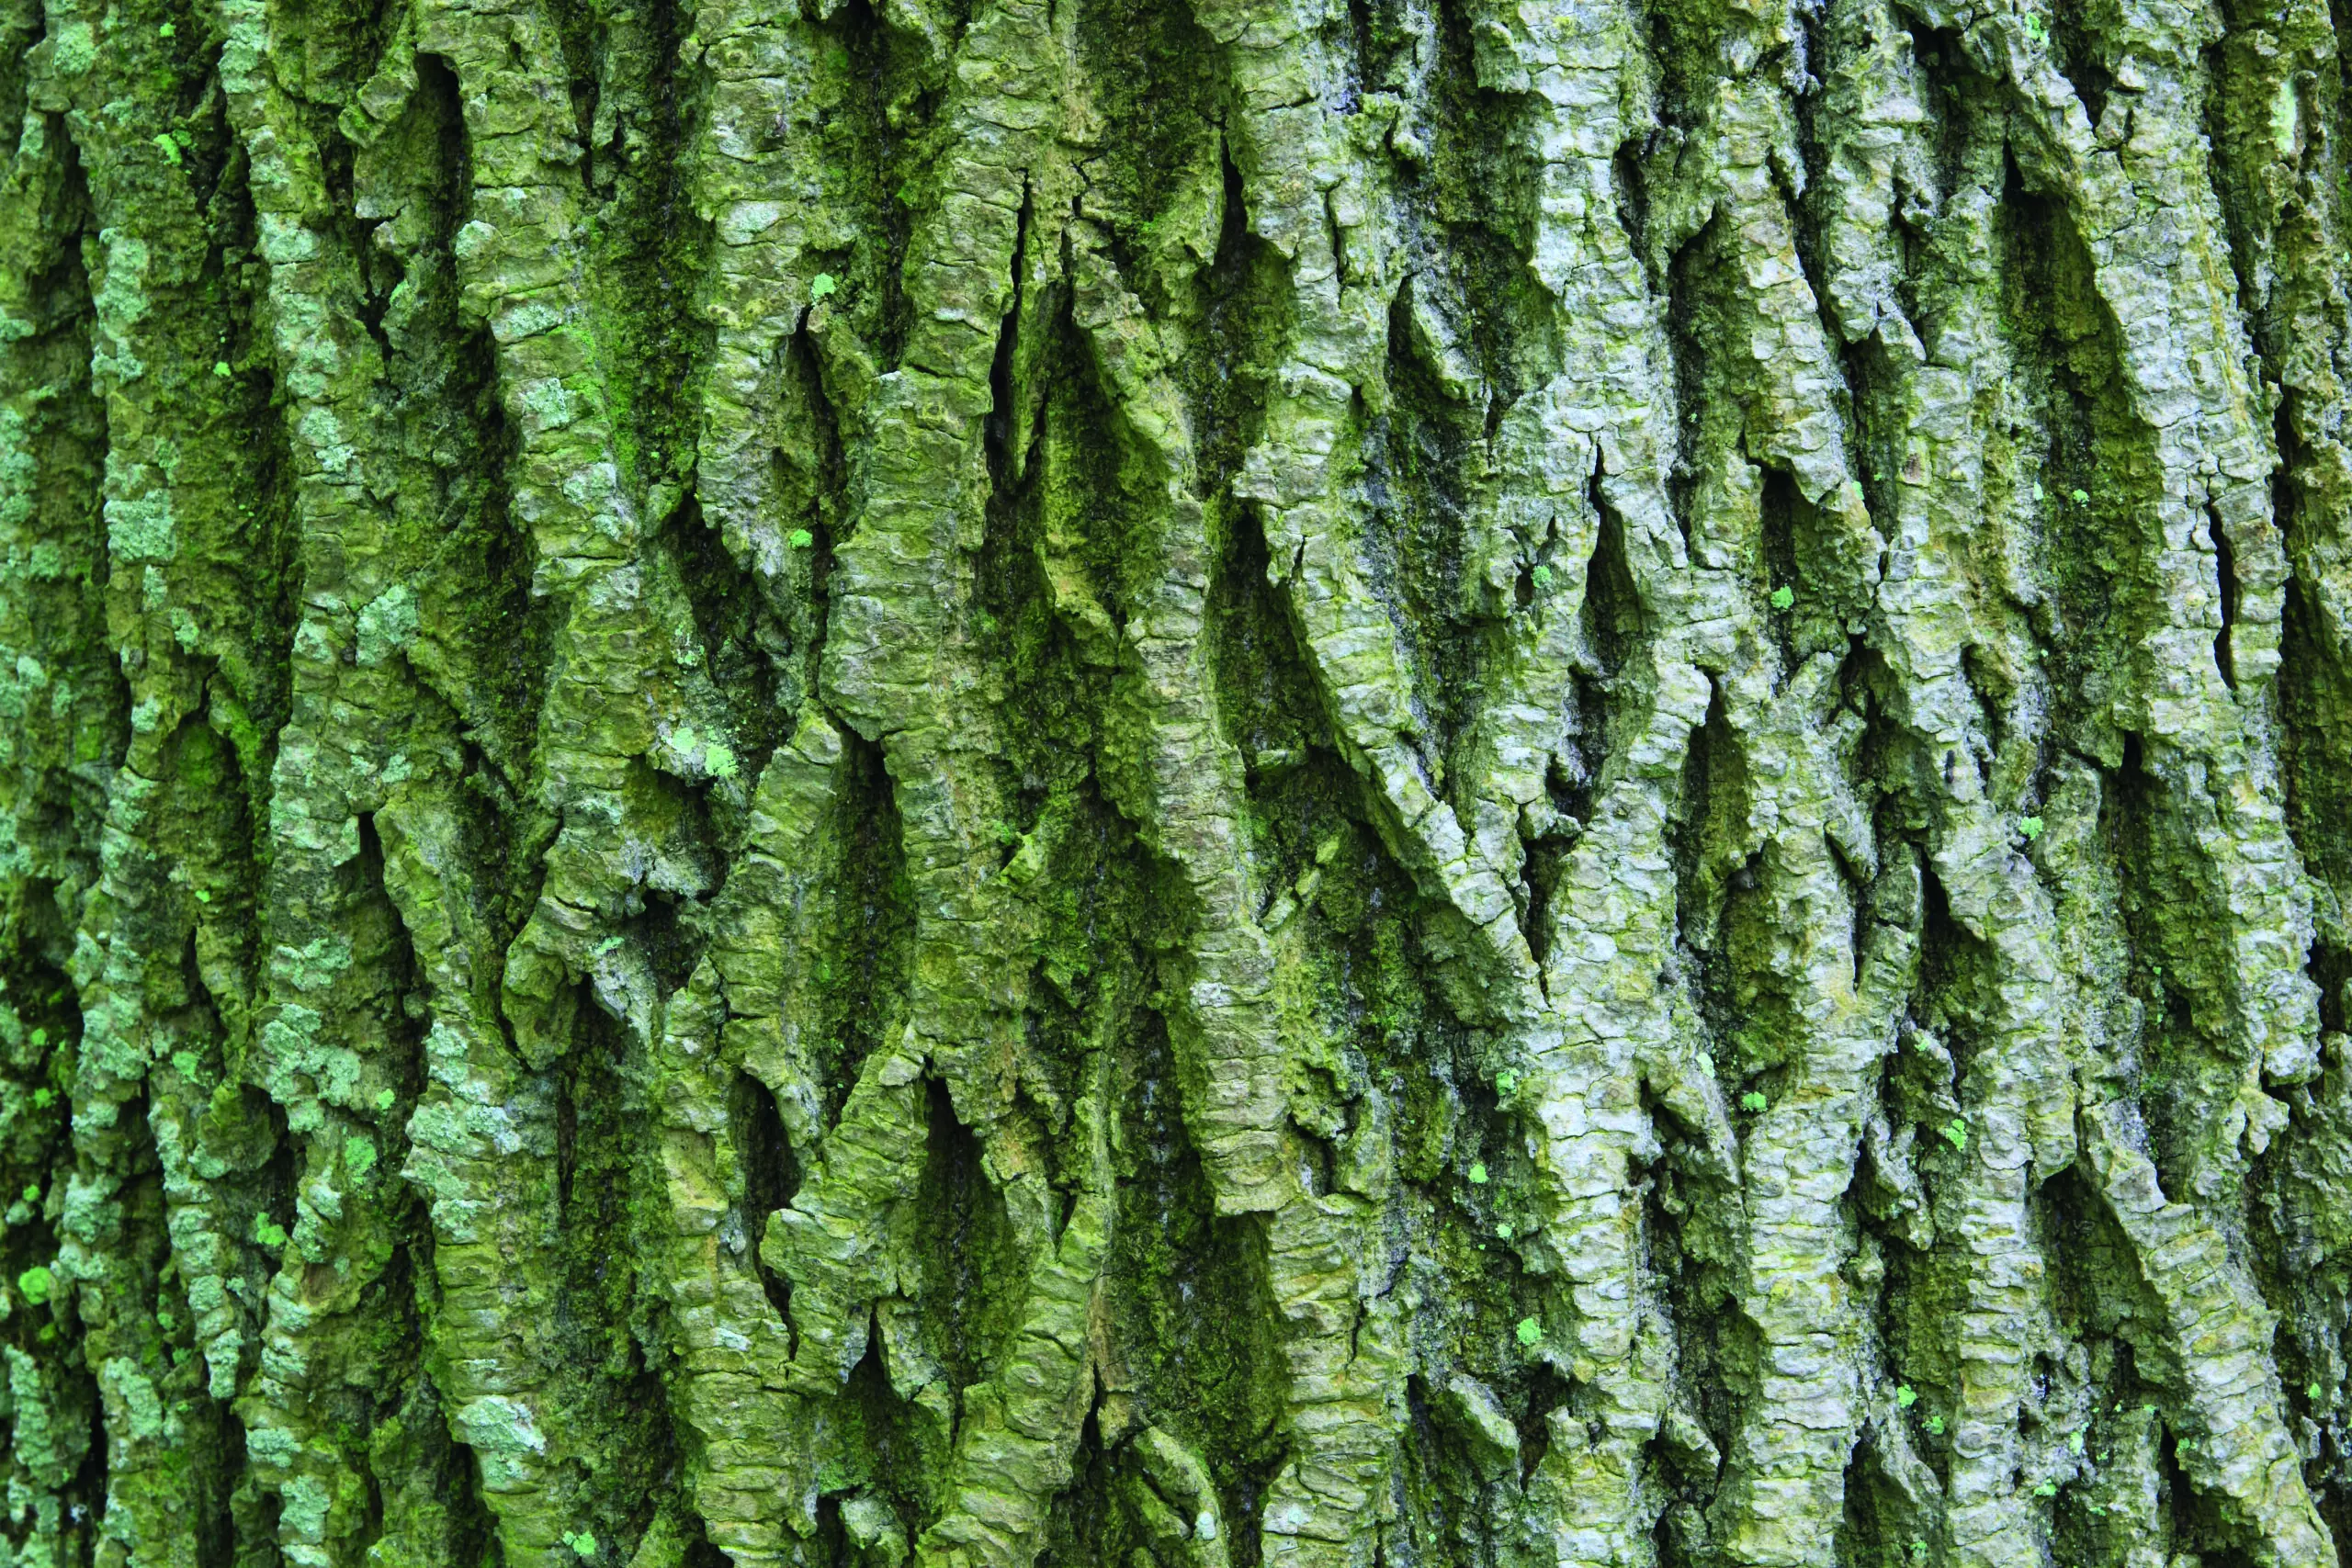 Wandbild (5434) Maple tree by picture alliance / blickwinkel/P. Frischknecht präsentiert: Abstrakt,Holz